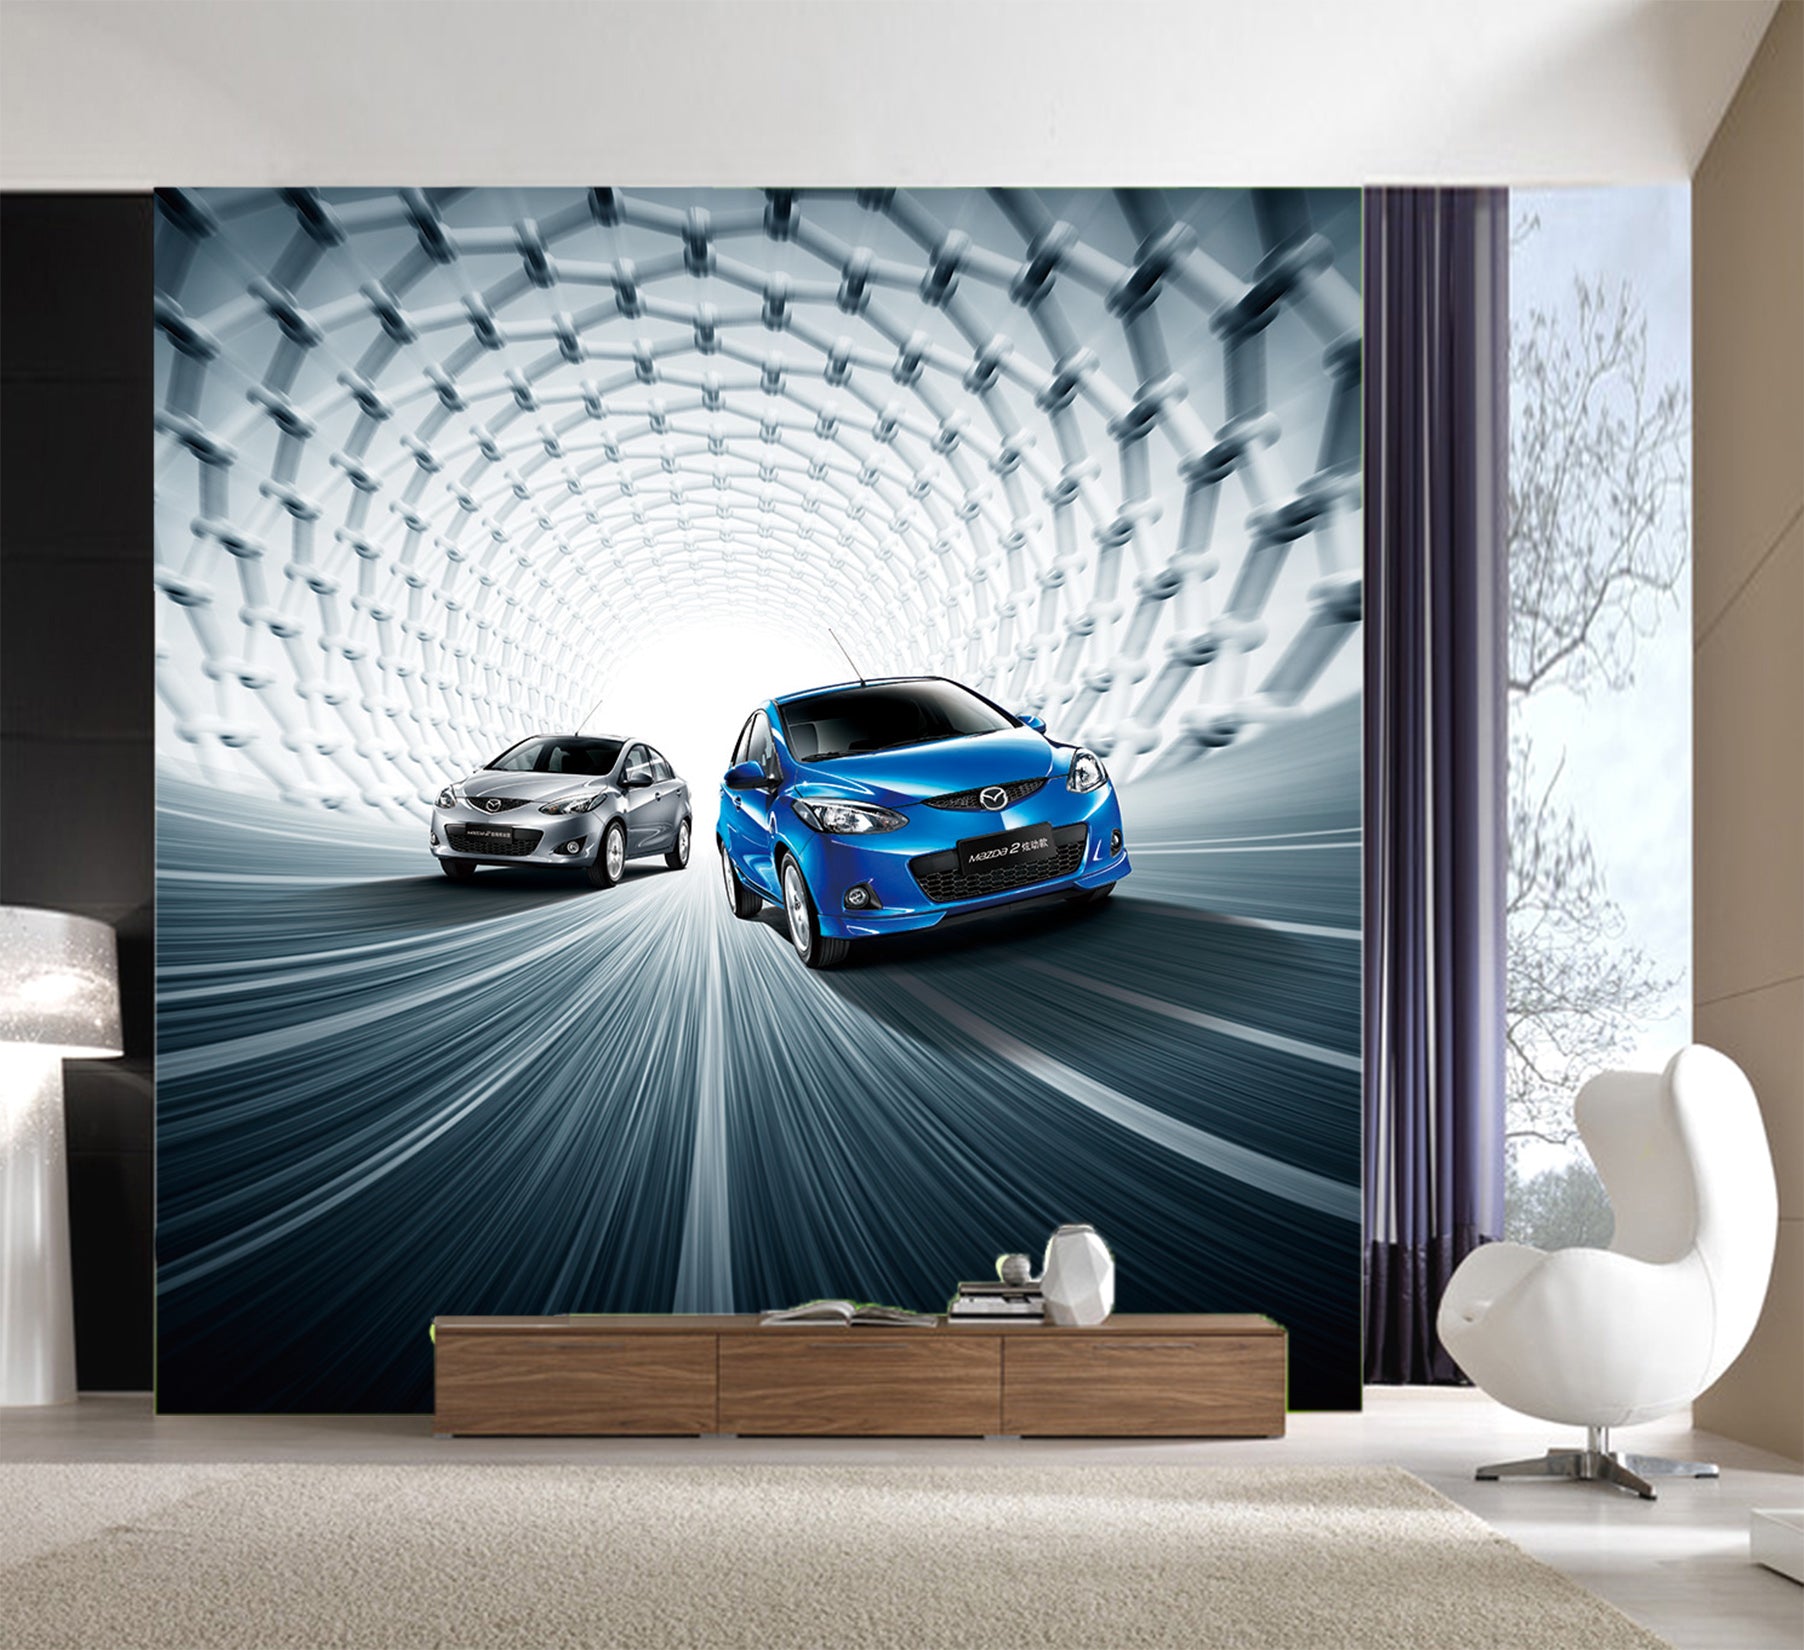 3D Tunnel Blue Car 070 Vehicle Wall Murals